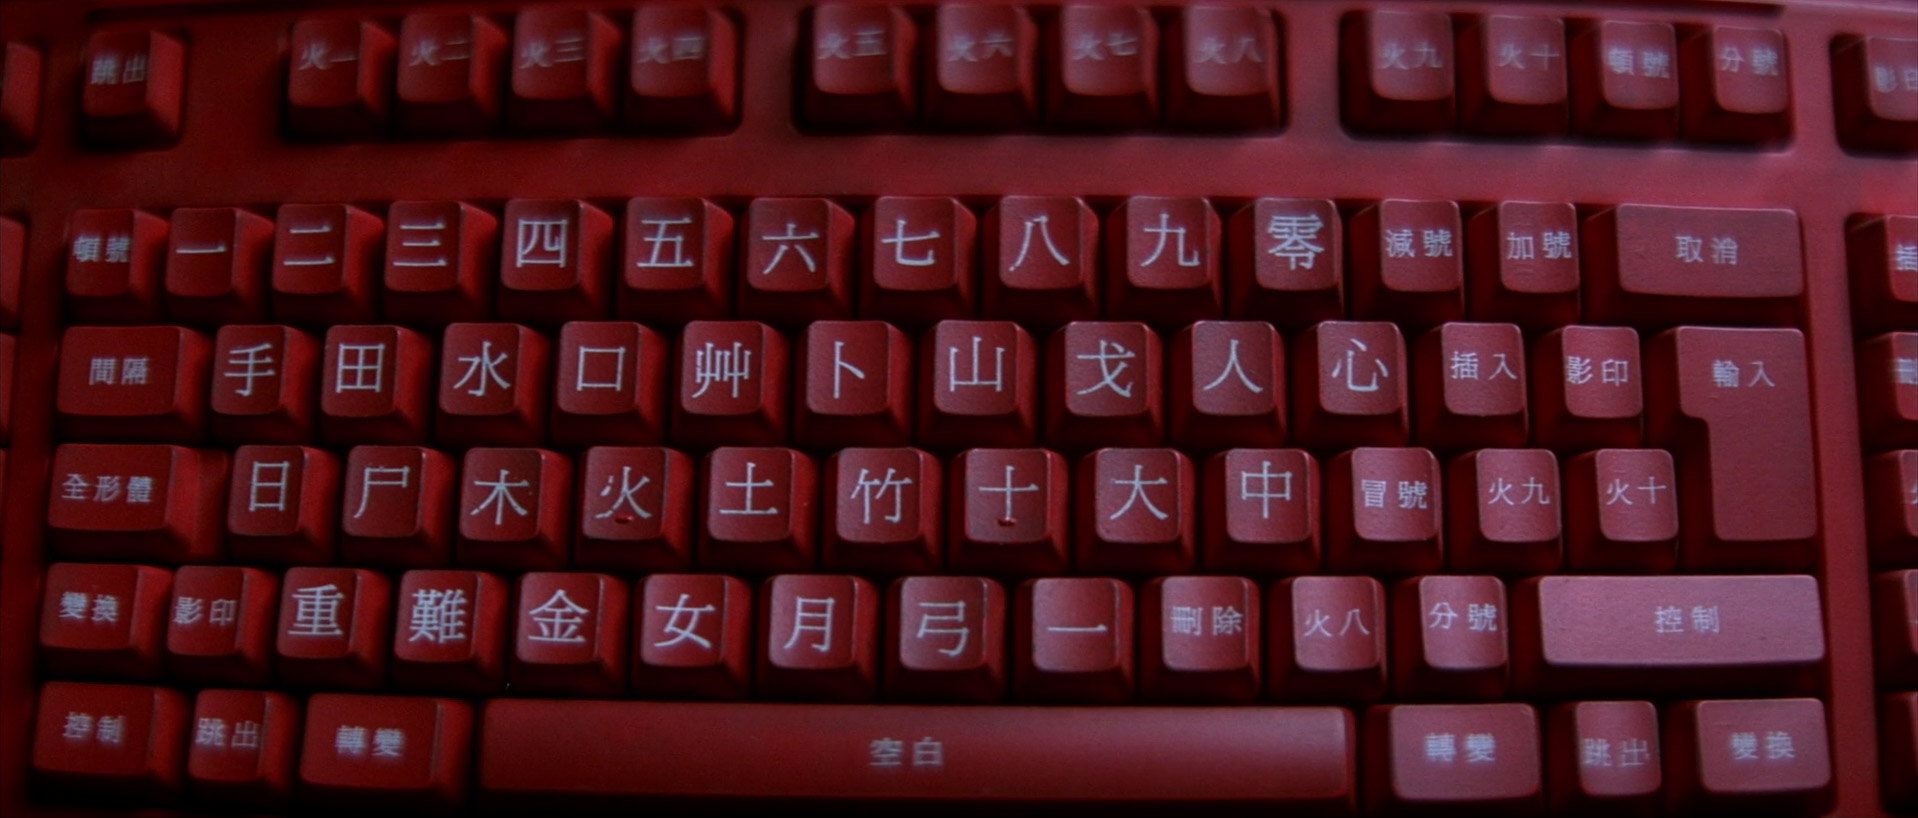 клавиатура китая